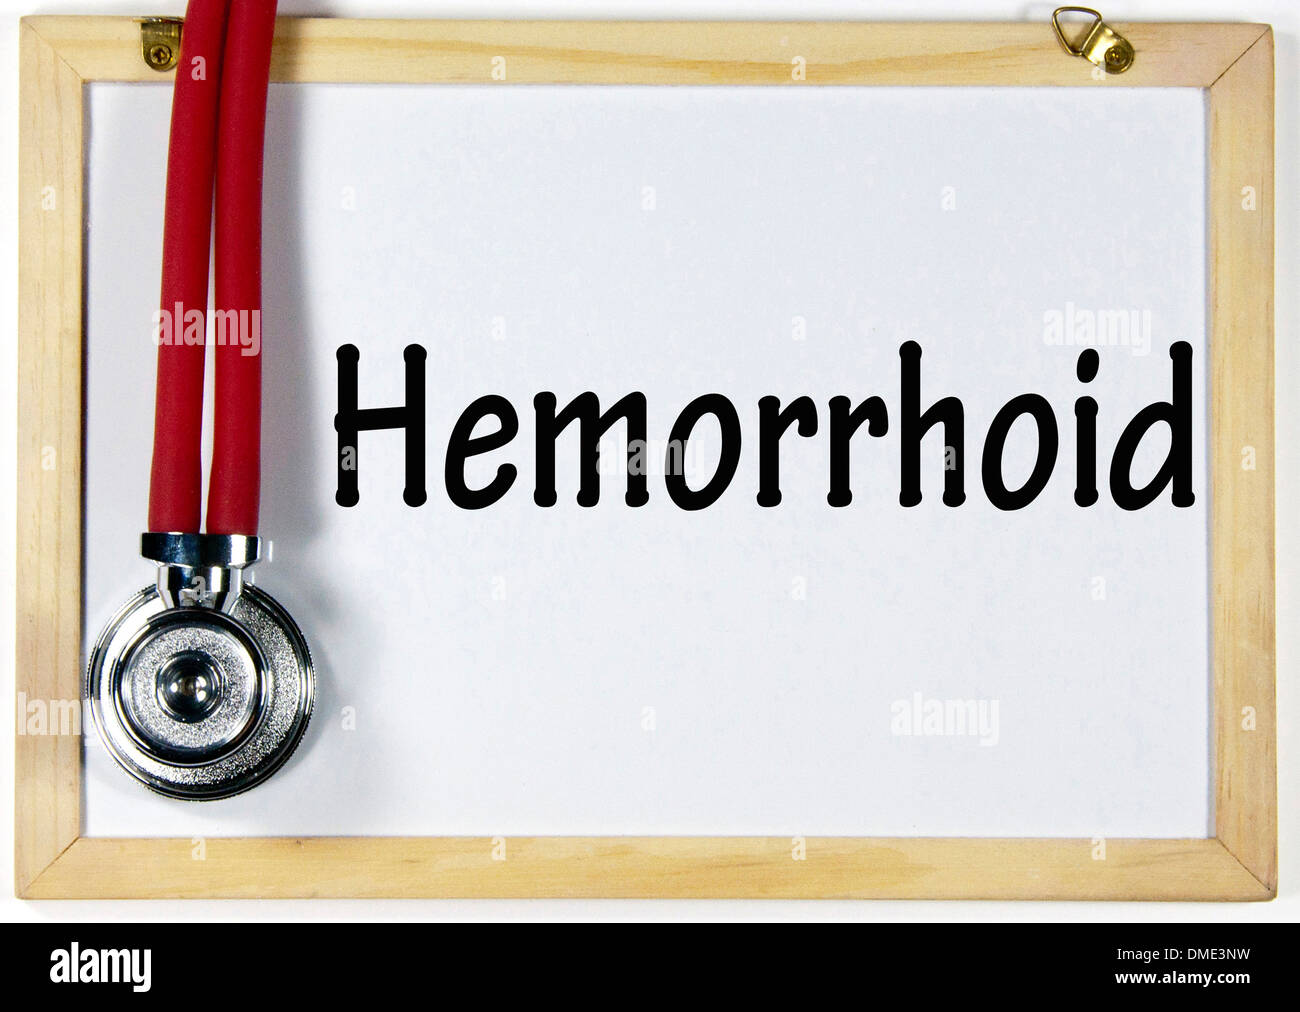 Diagnostic de hemorrhoid sign Banque D'Images